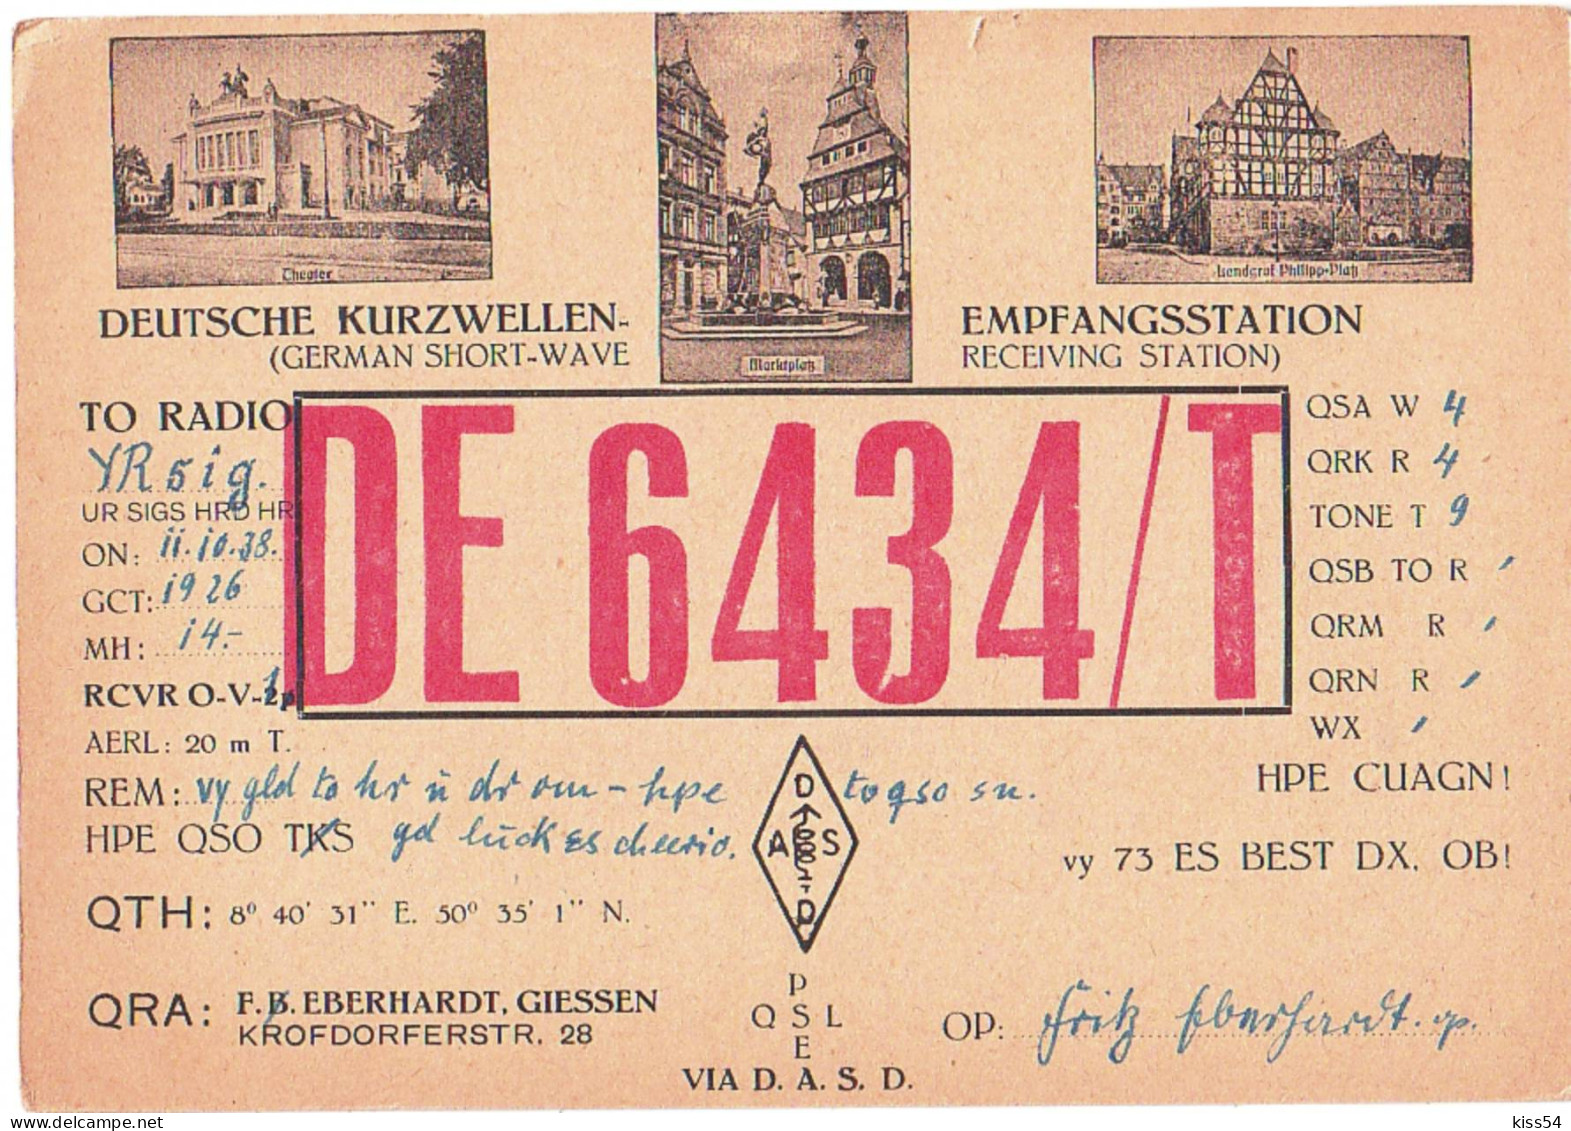 Q 40 - 31 GERMANY - 1938 - Radio-amateur